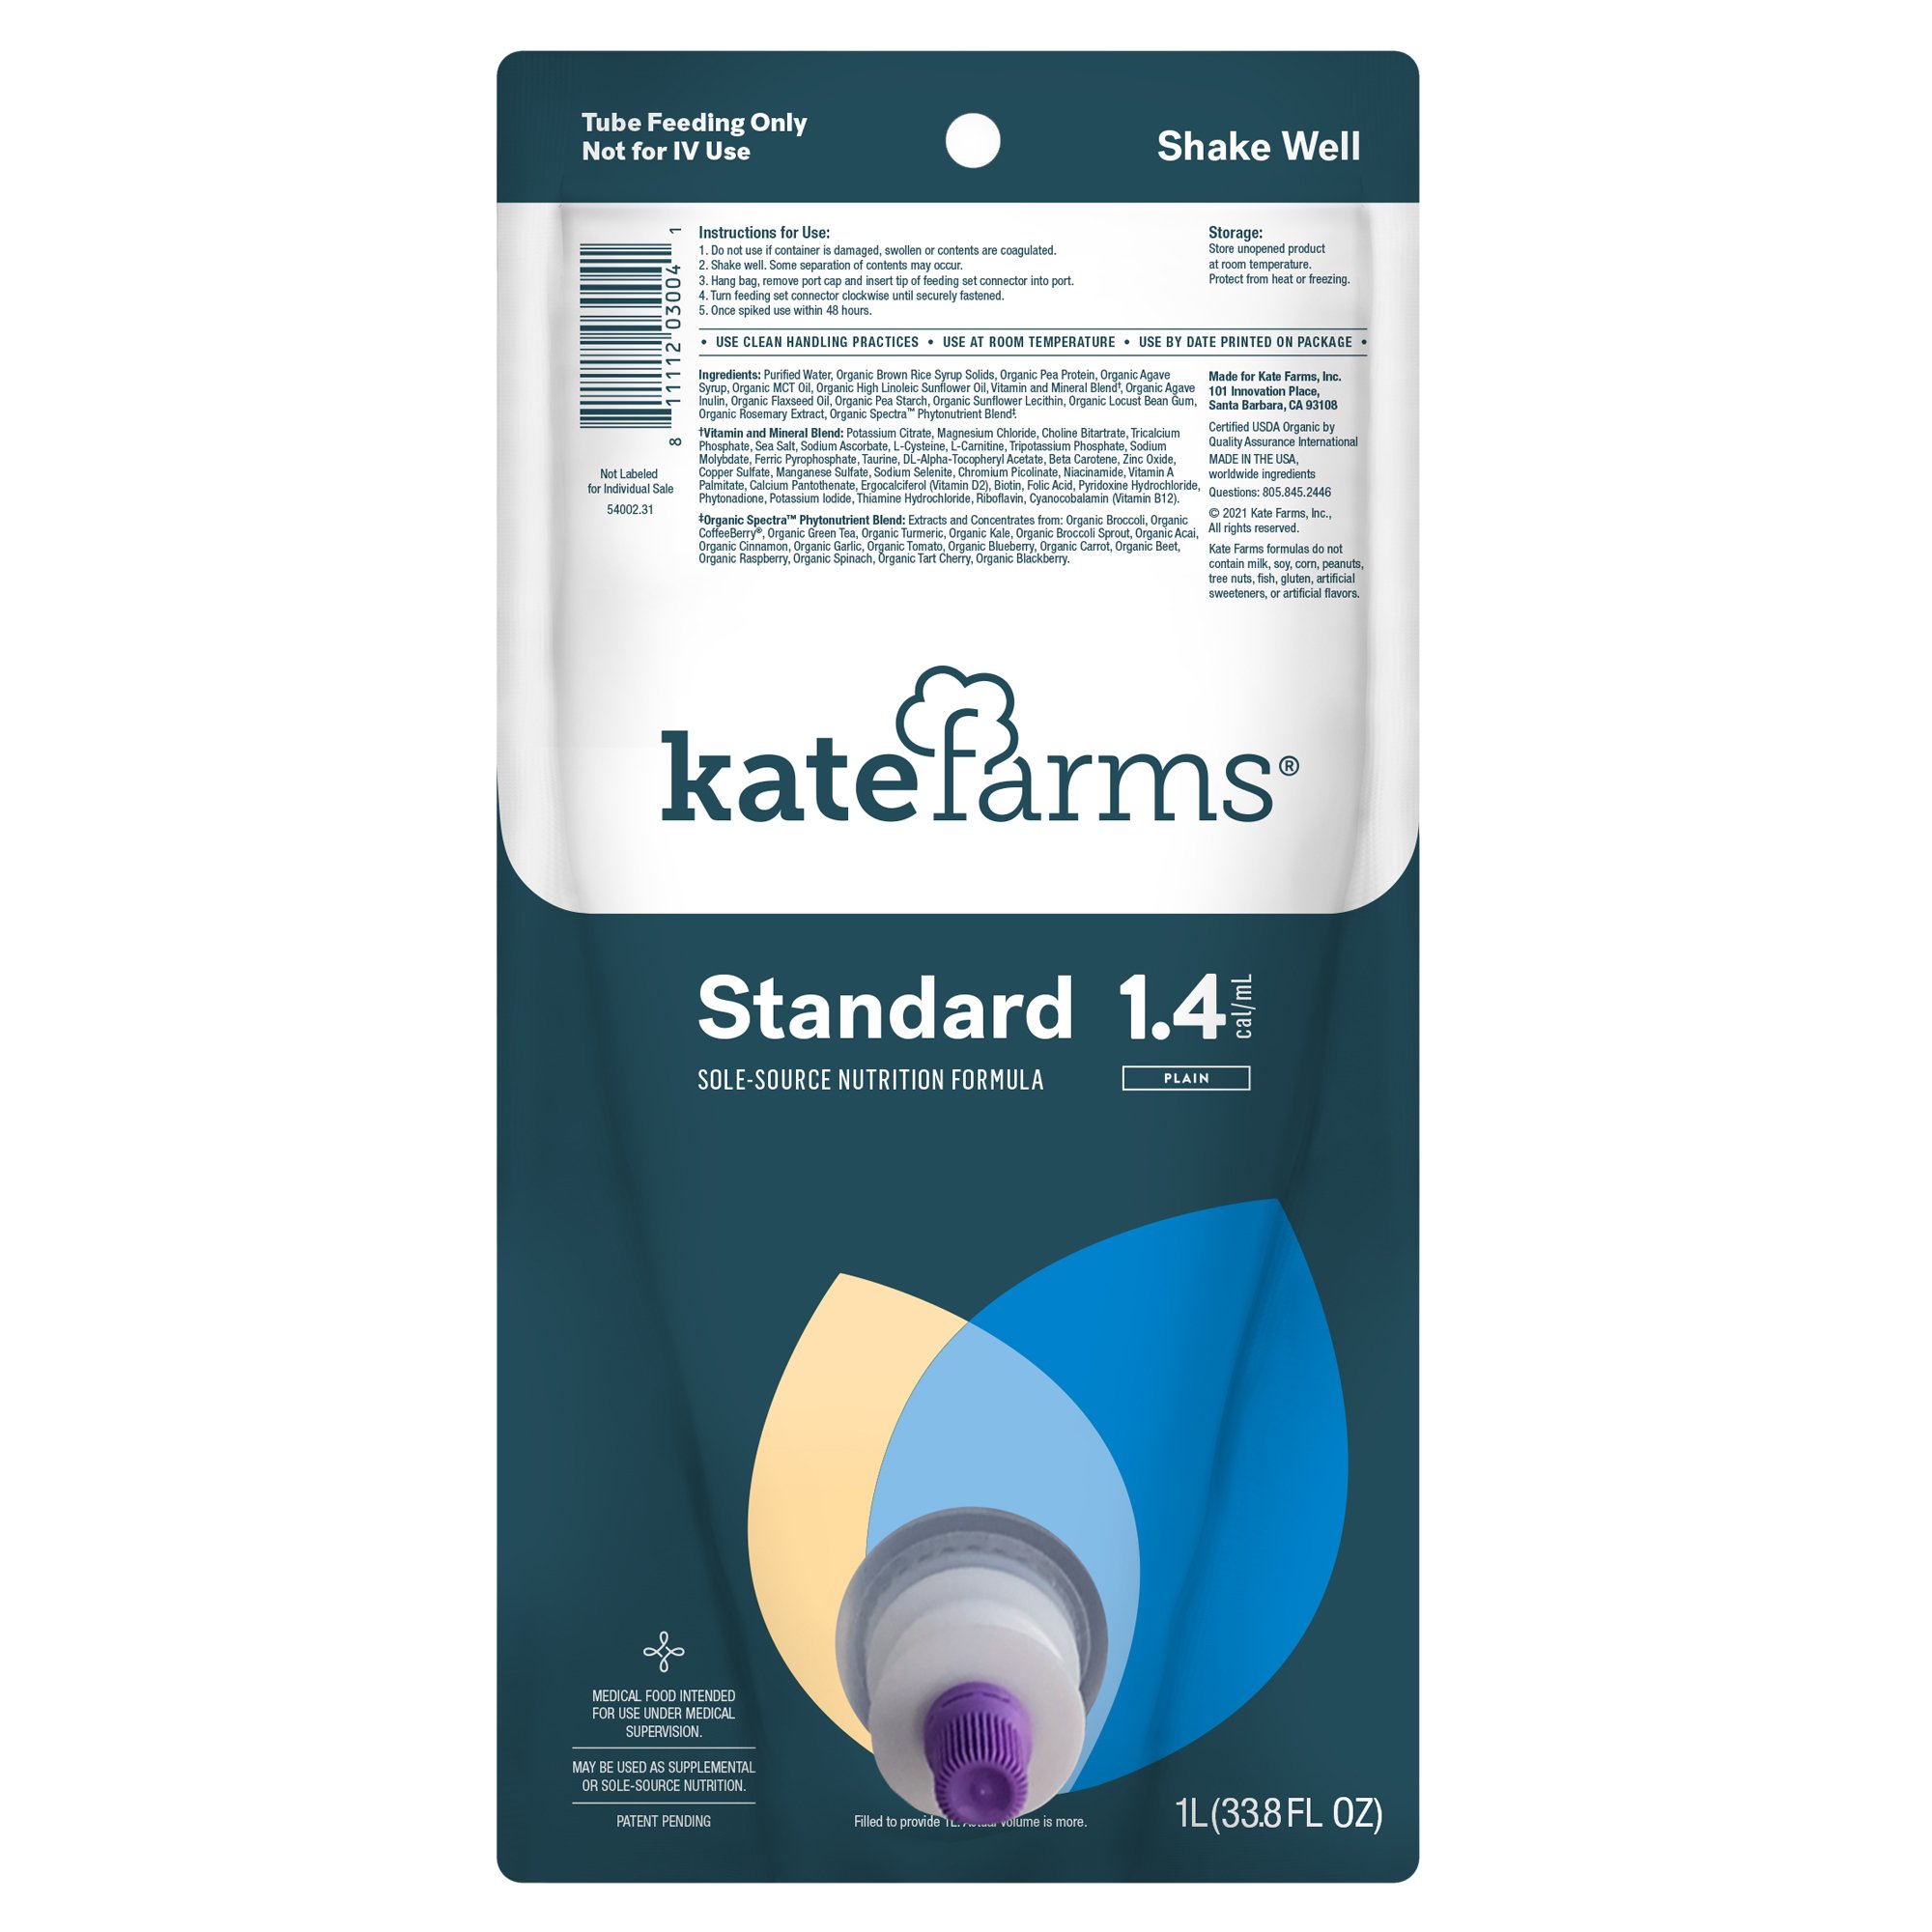 Kate Farms Standard 1.4 Sole-Source Nutrition Formula, 1000 mL Bag MK 1184939